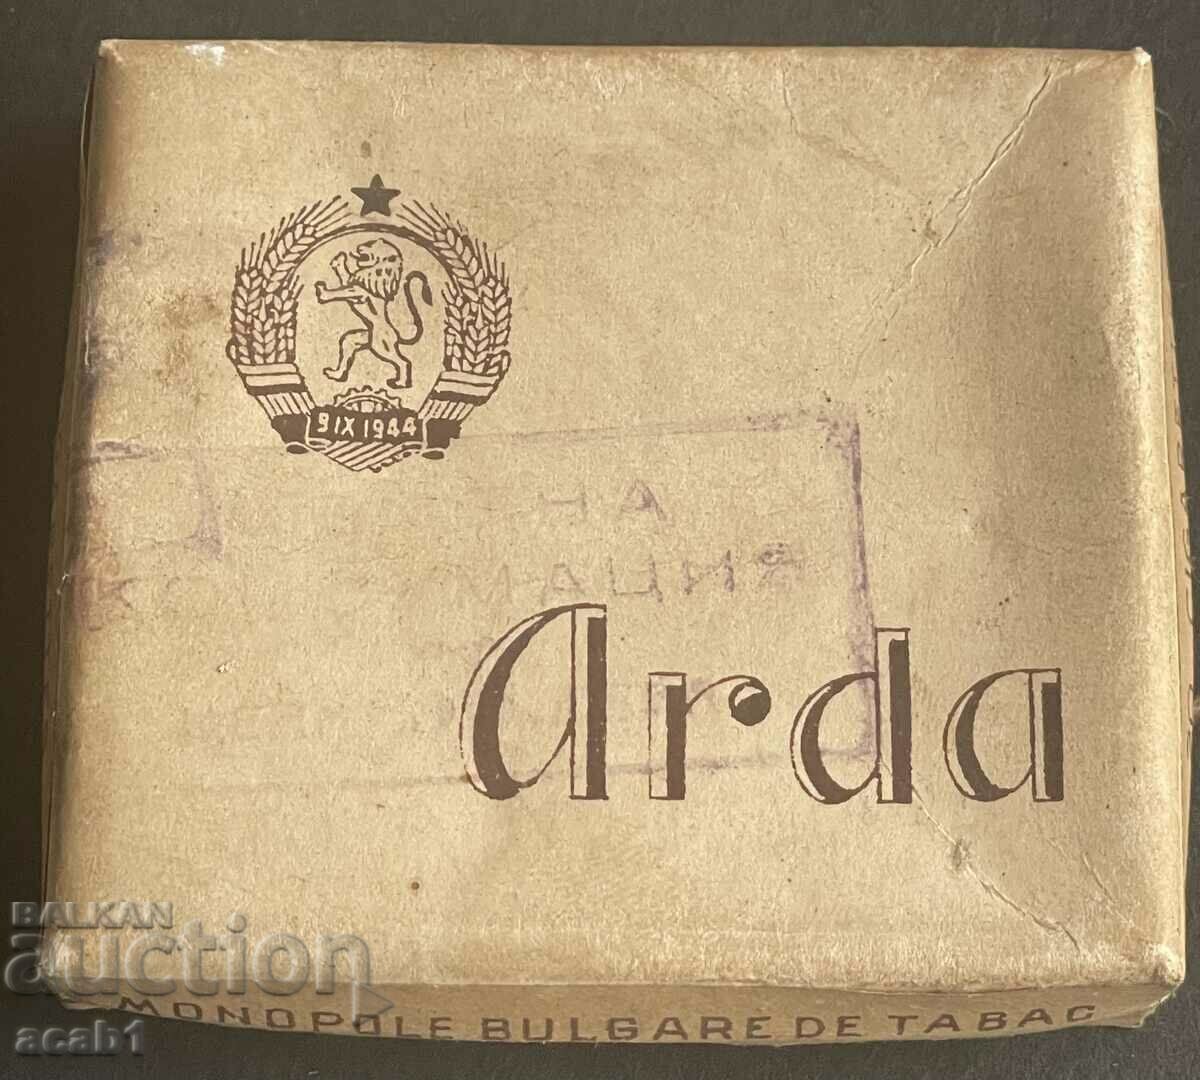 Arda Soc Coat of Arms